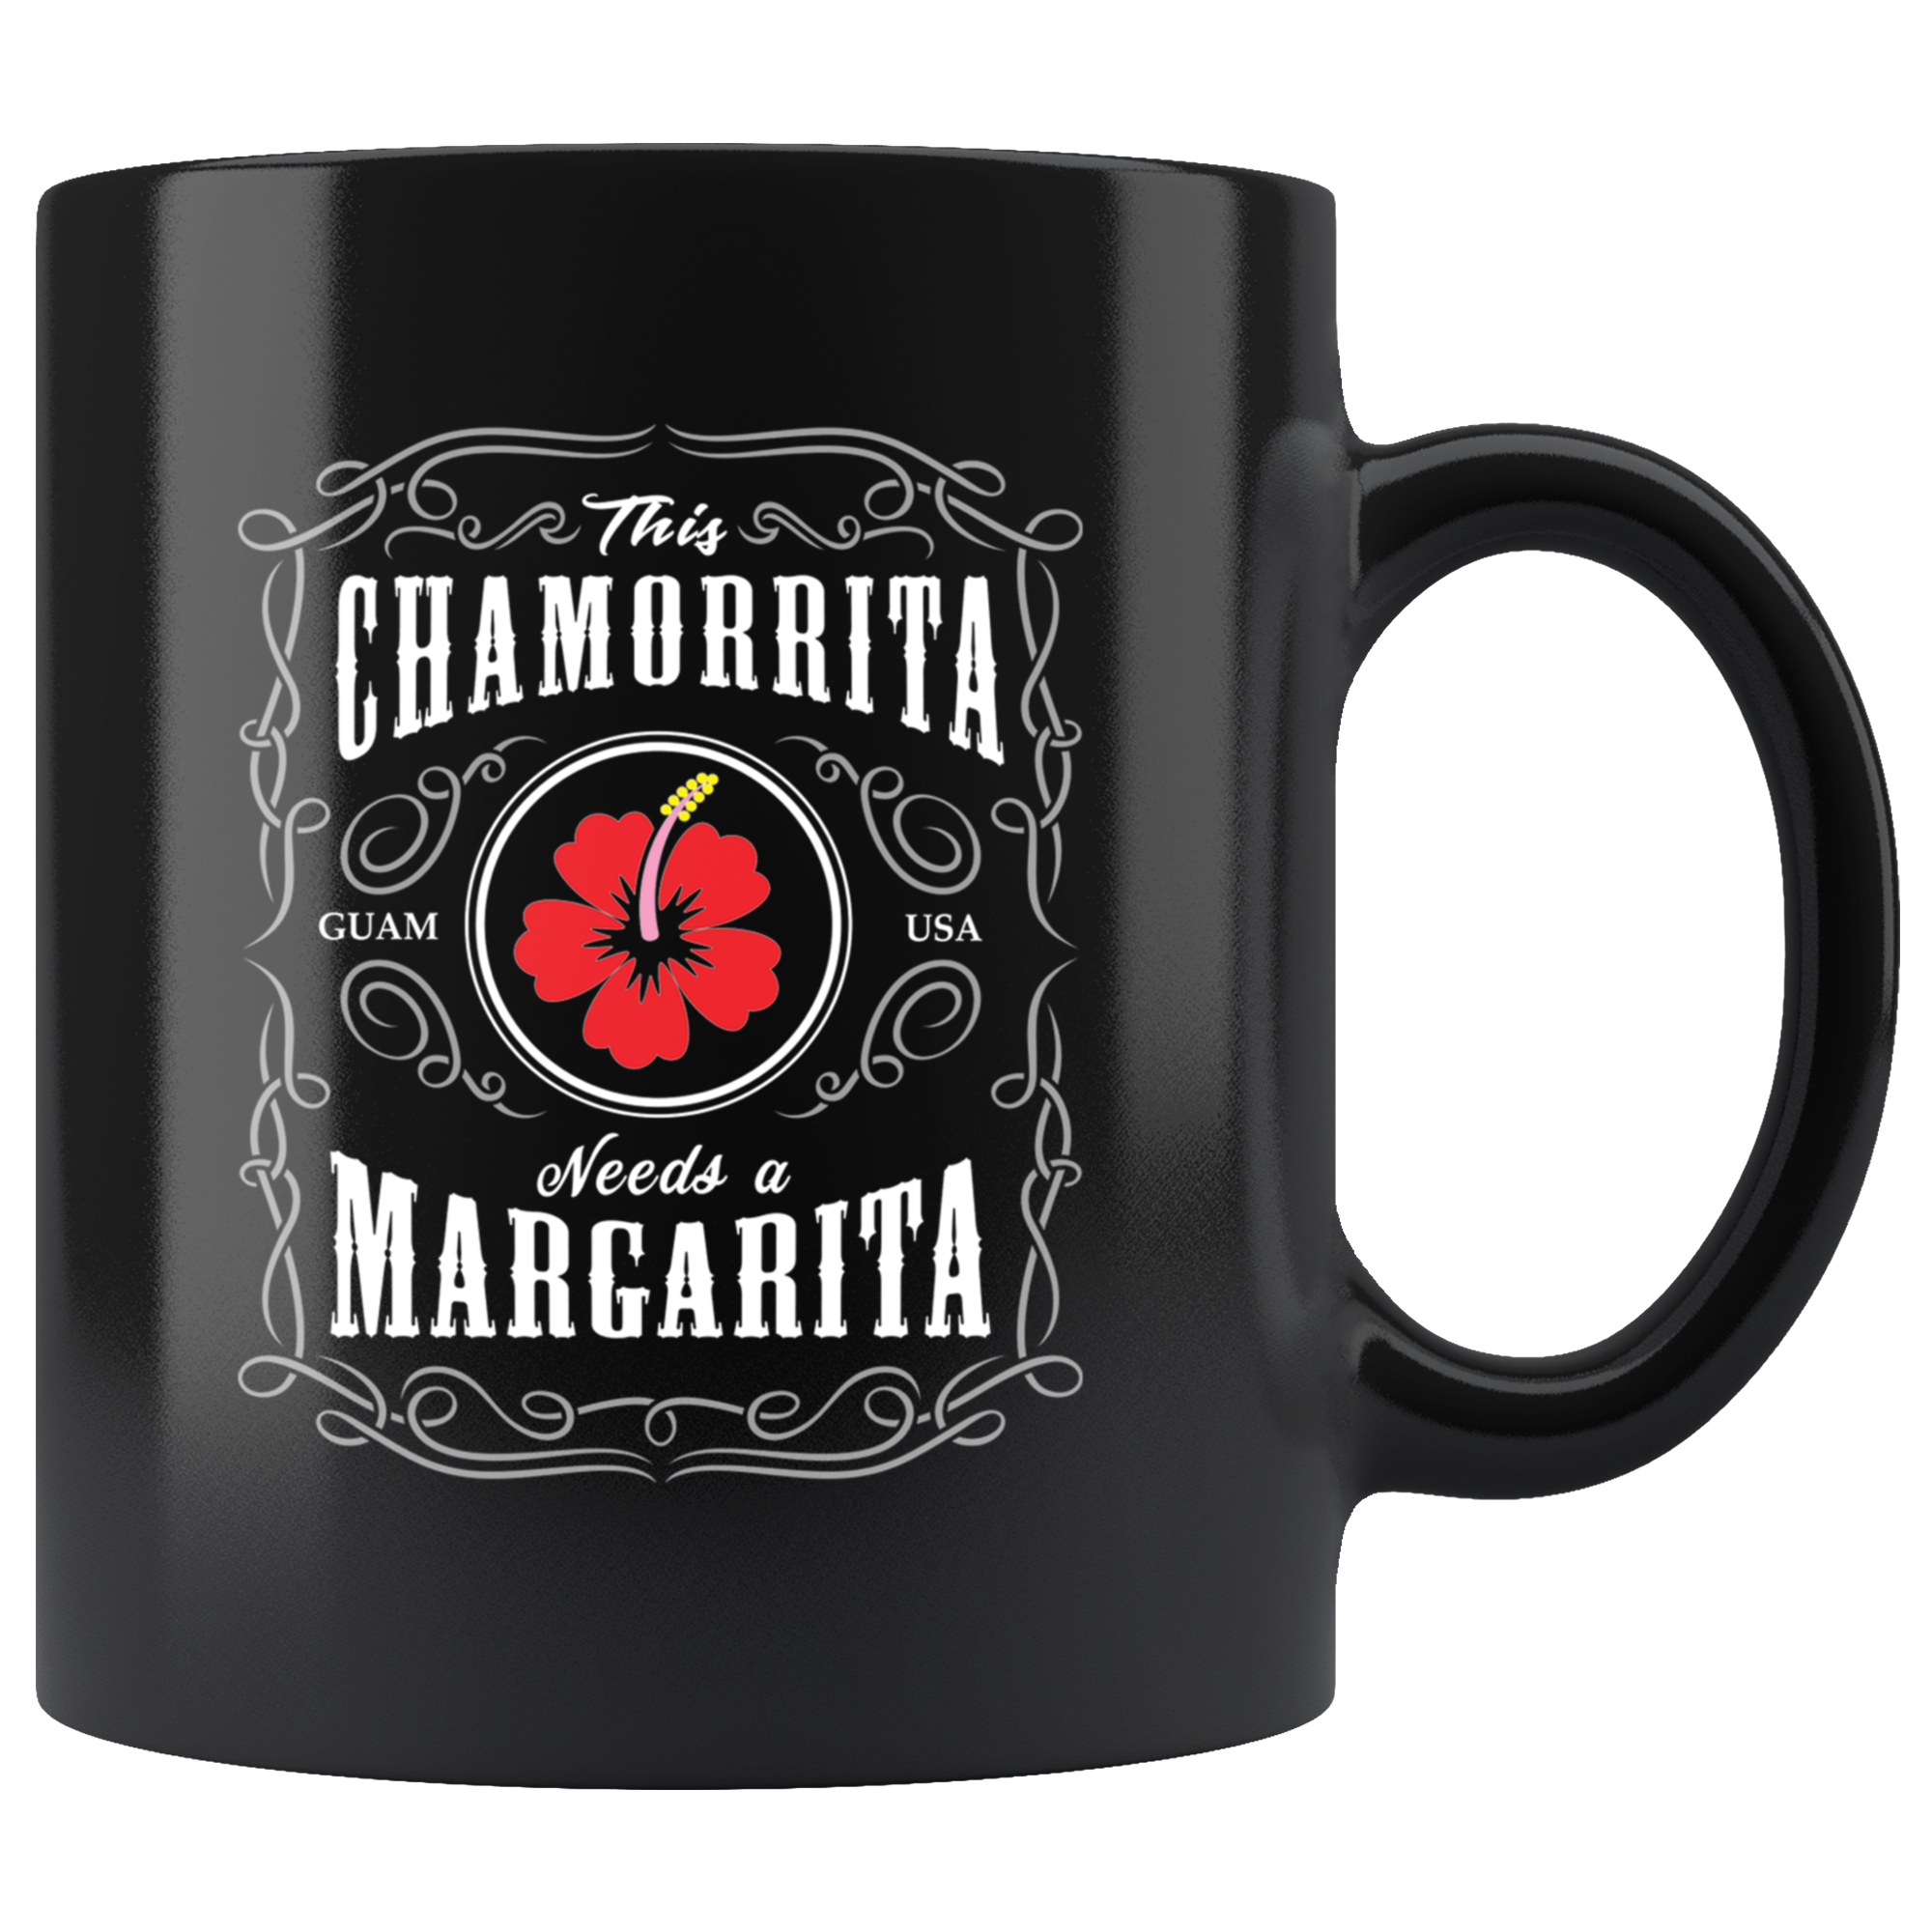 Chamorrita needs a Margarita Mug